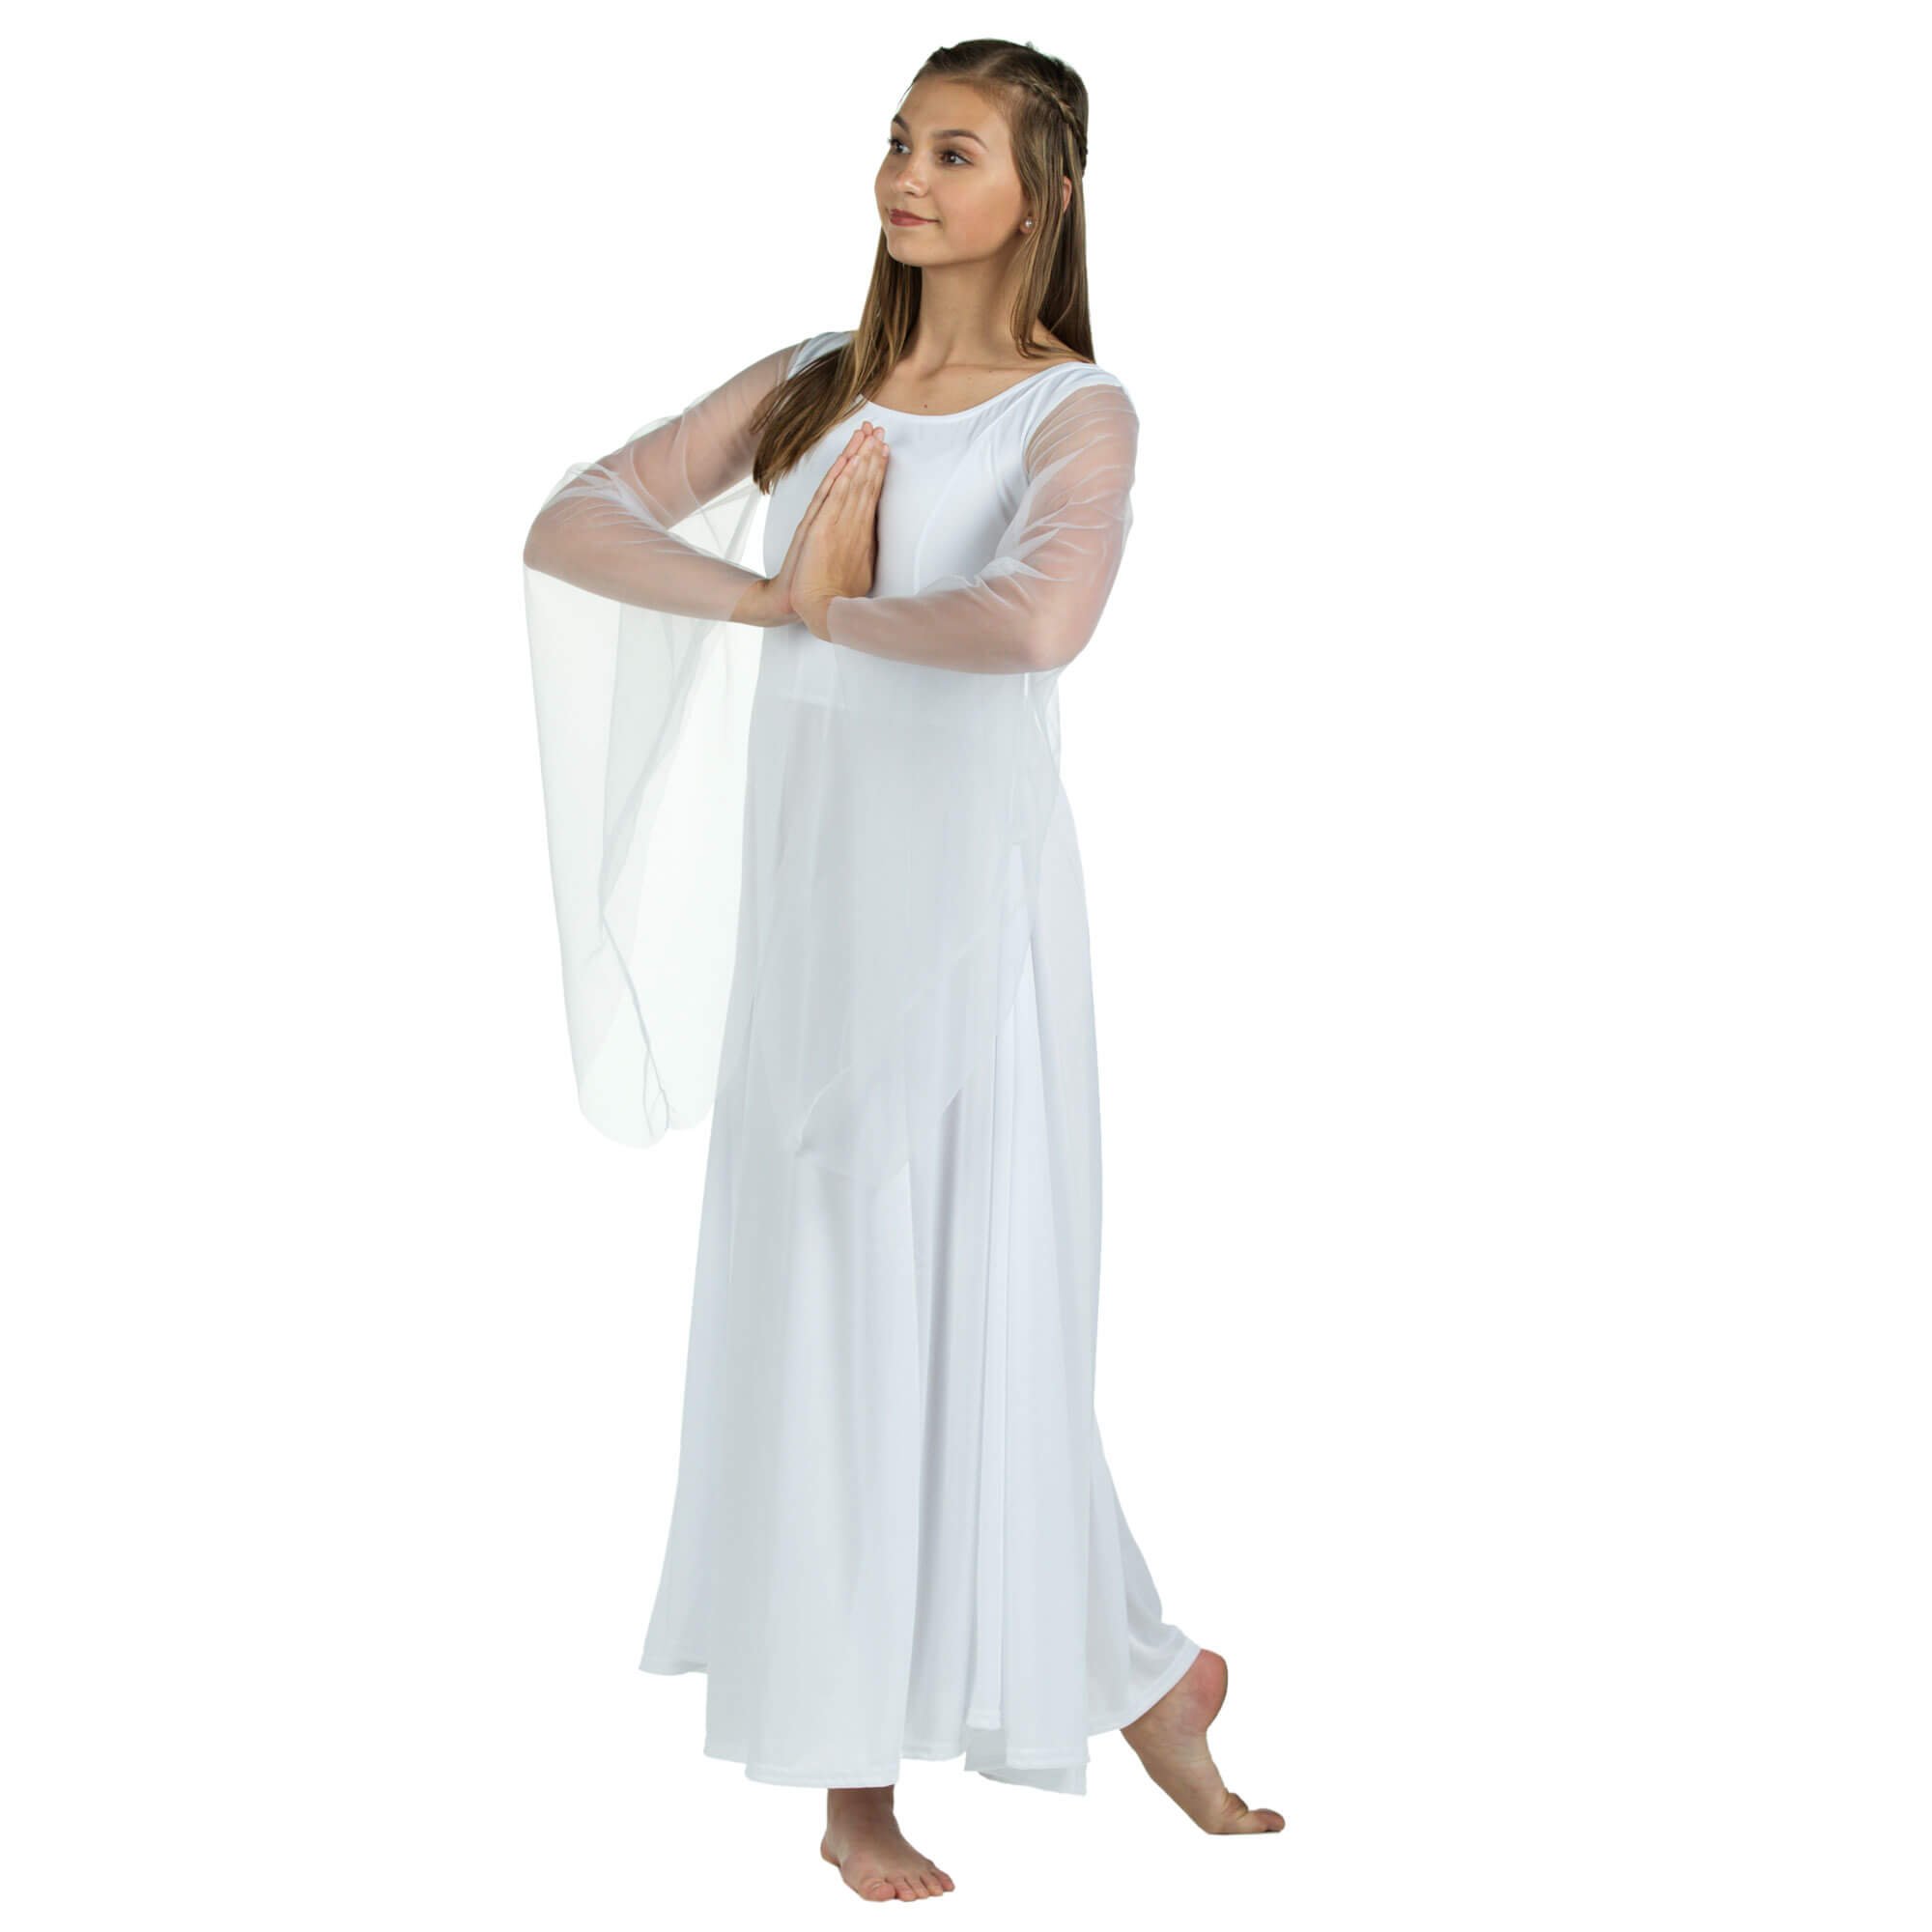 Danzcue Praise Dance Princess Angel Sleeve Dress - Click Image to Close